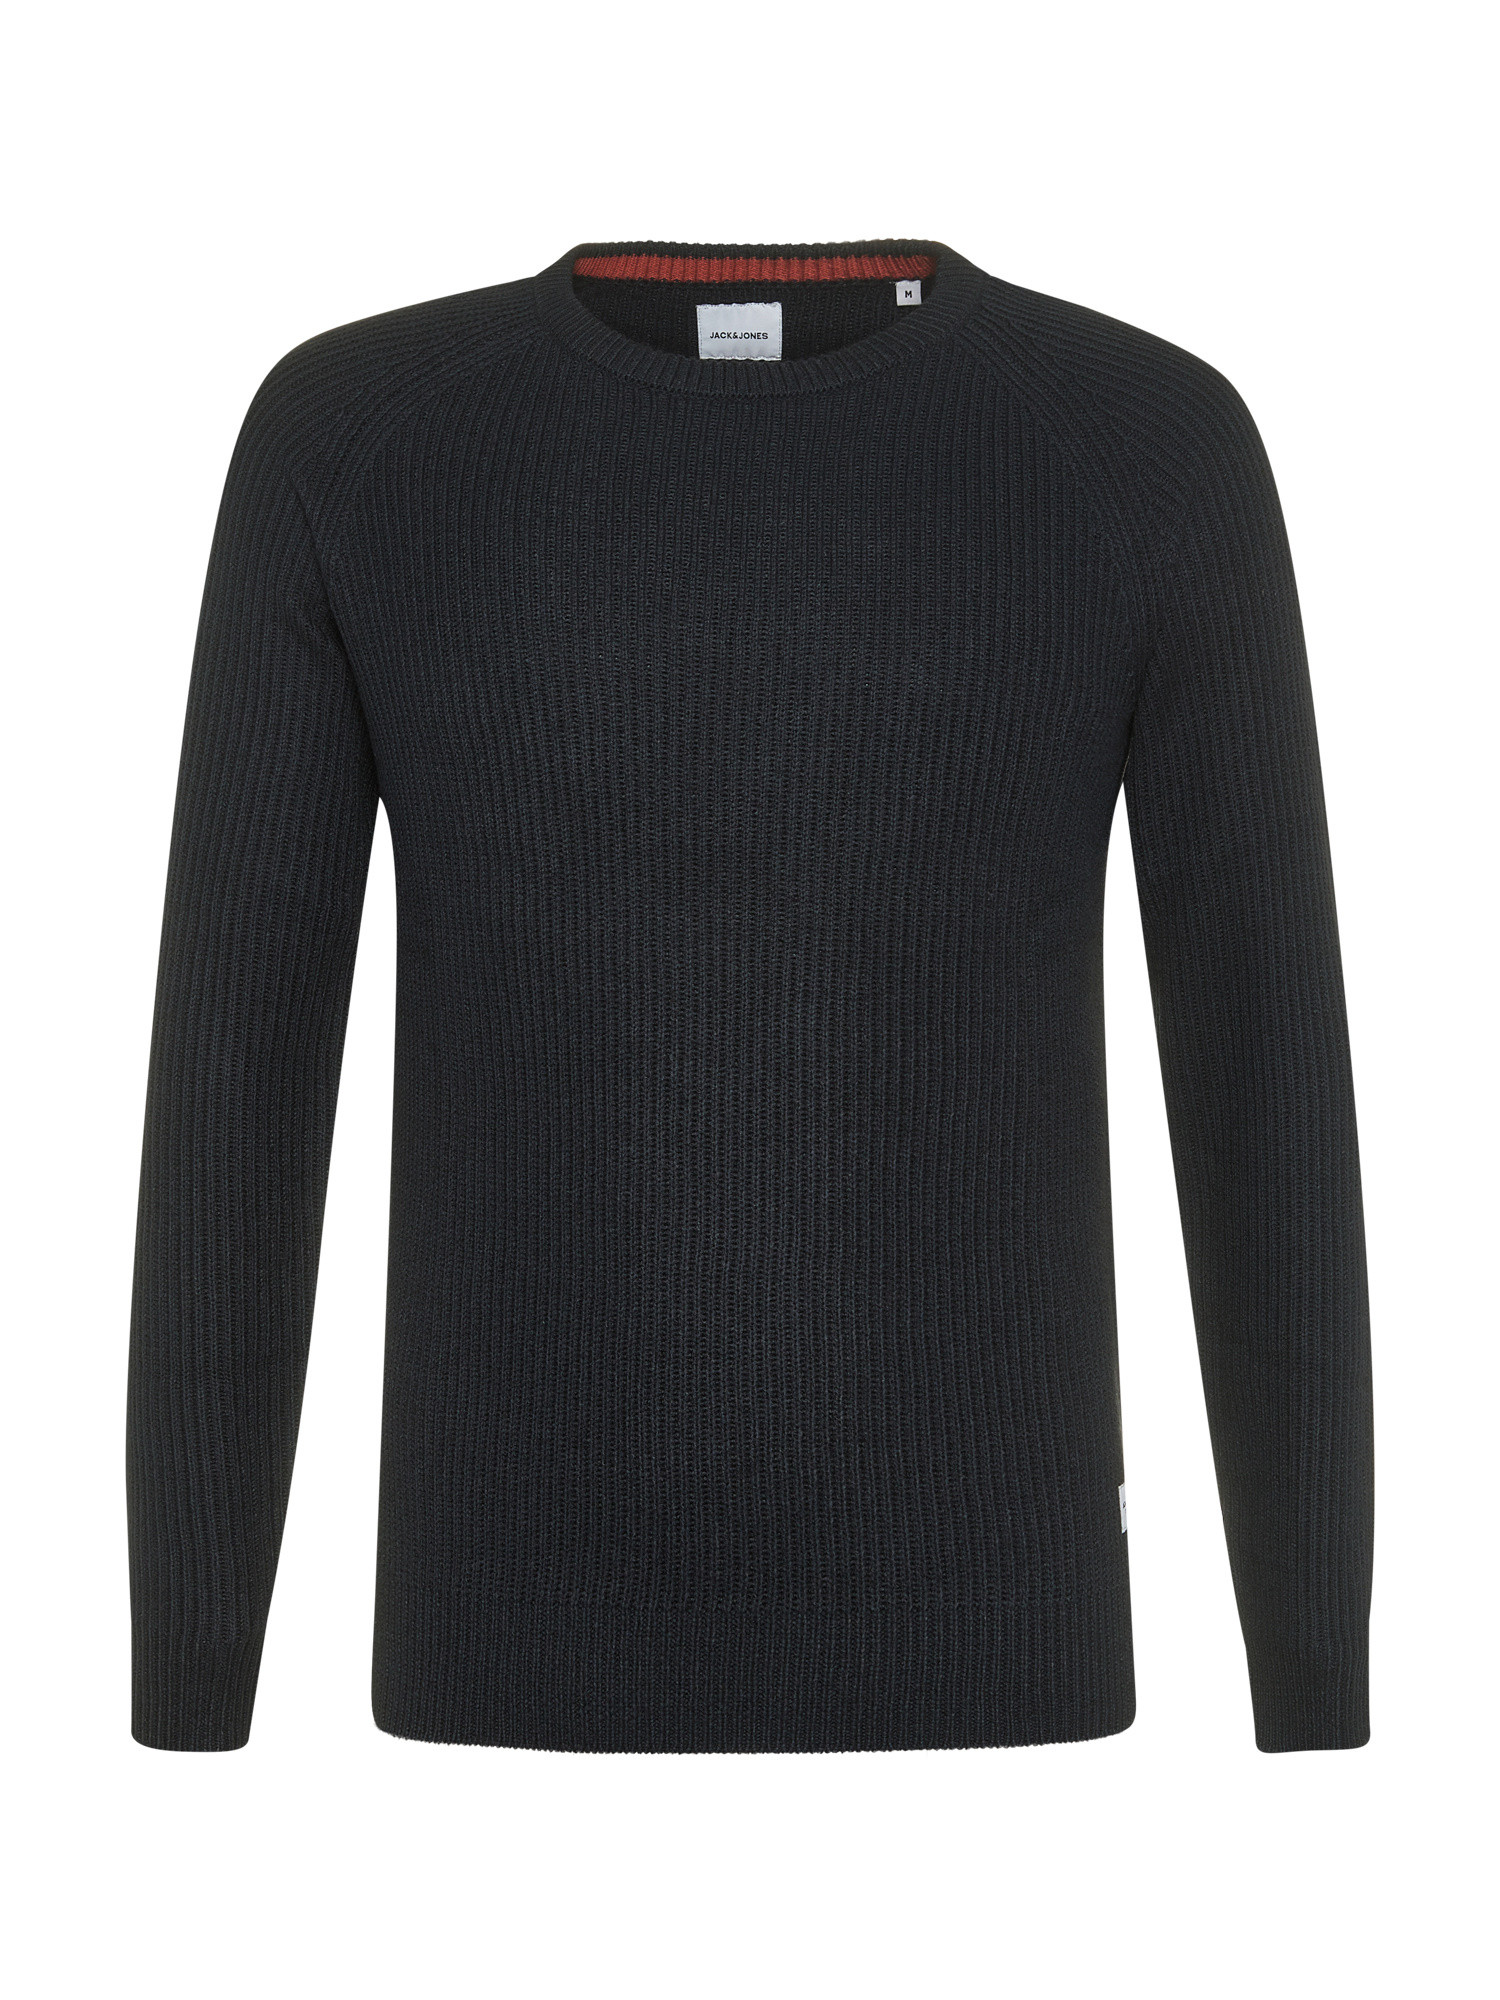 Jack & Jones Ribbed Knitted Sweater, Dark Blue, large image number 0